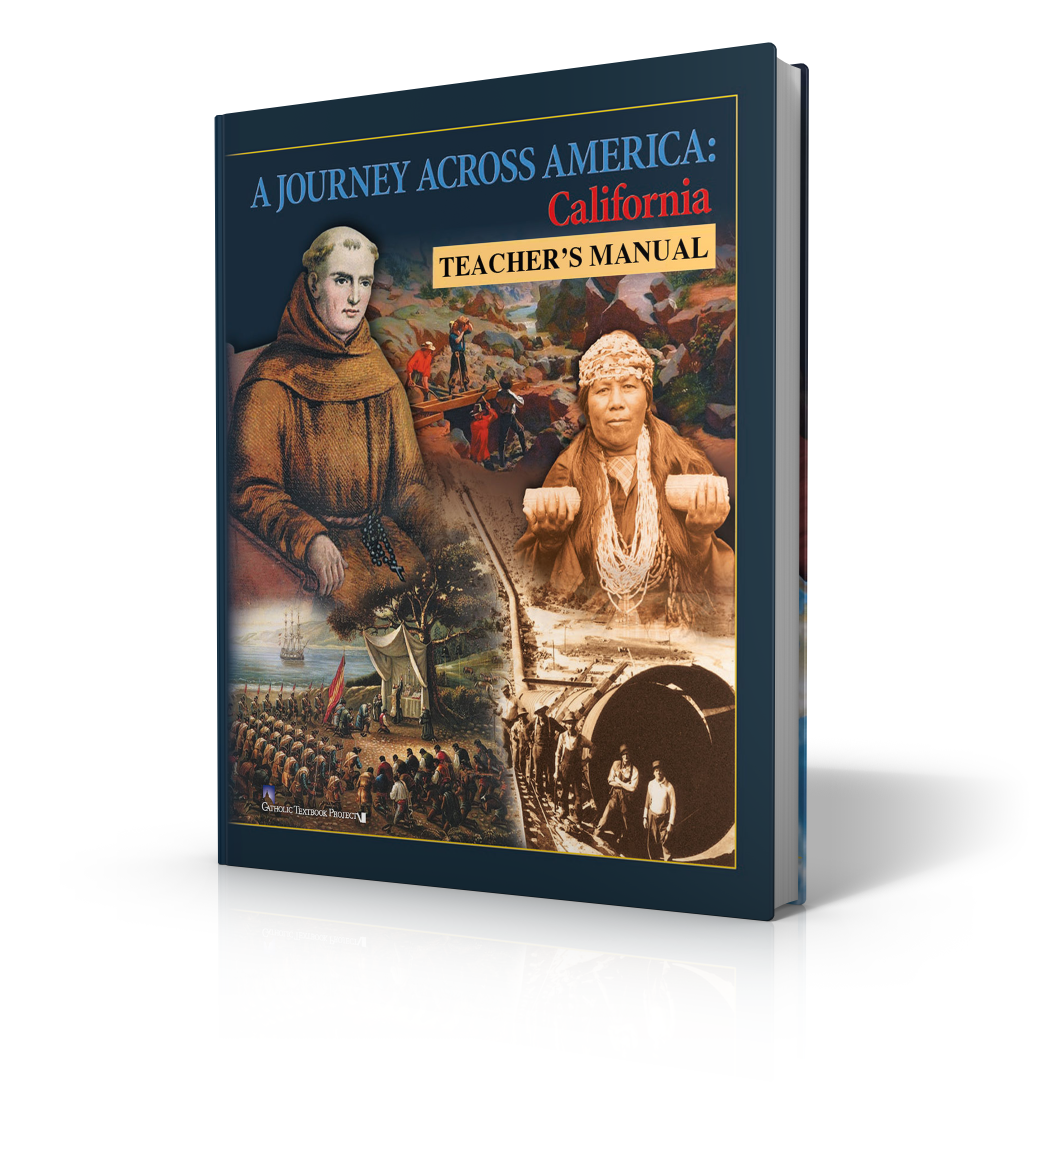 A Journey Across America: California (Teacher’s Manual)